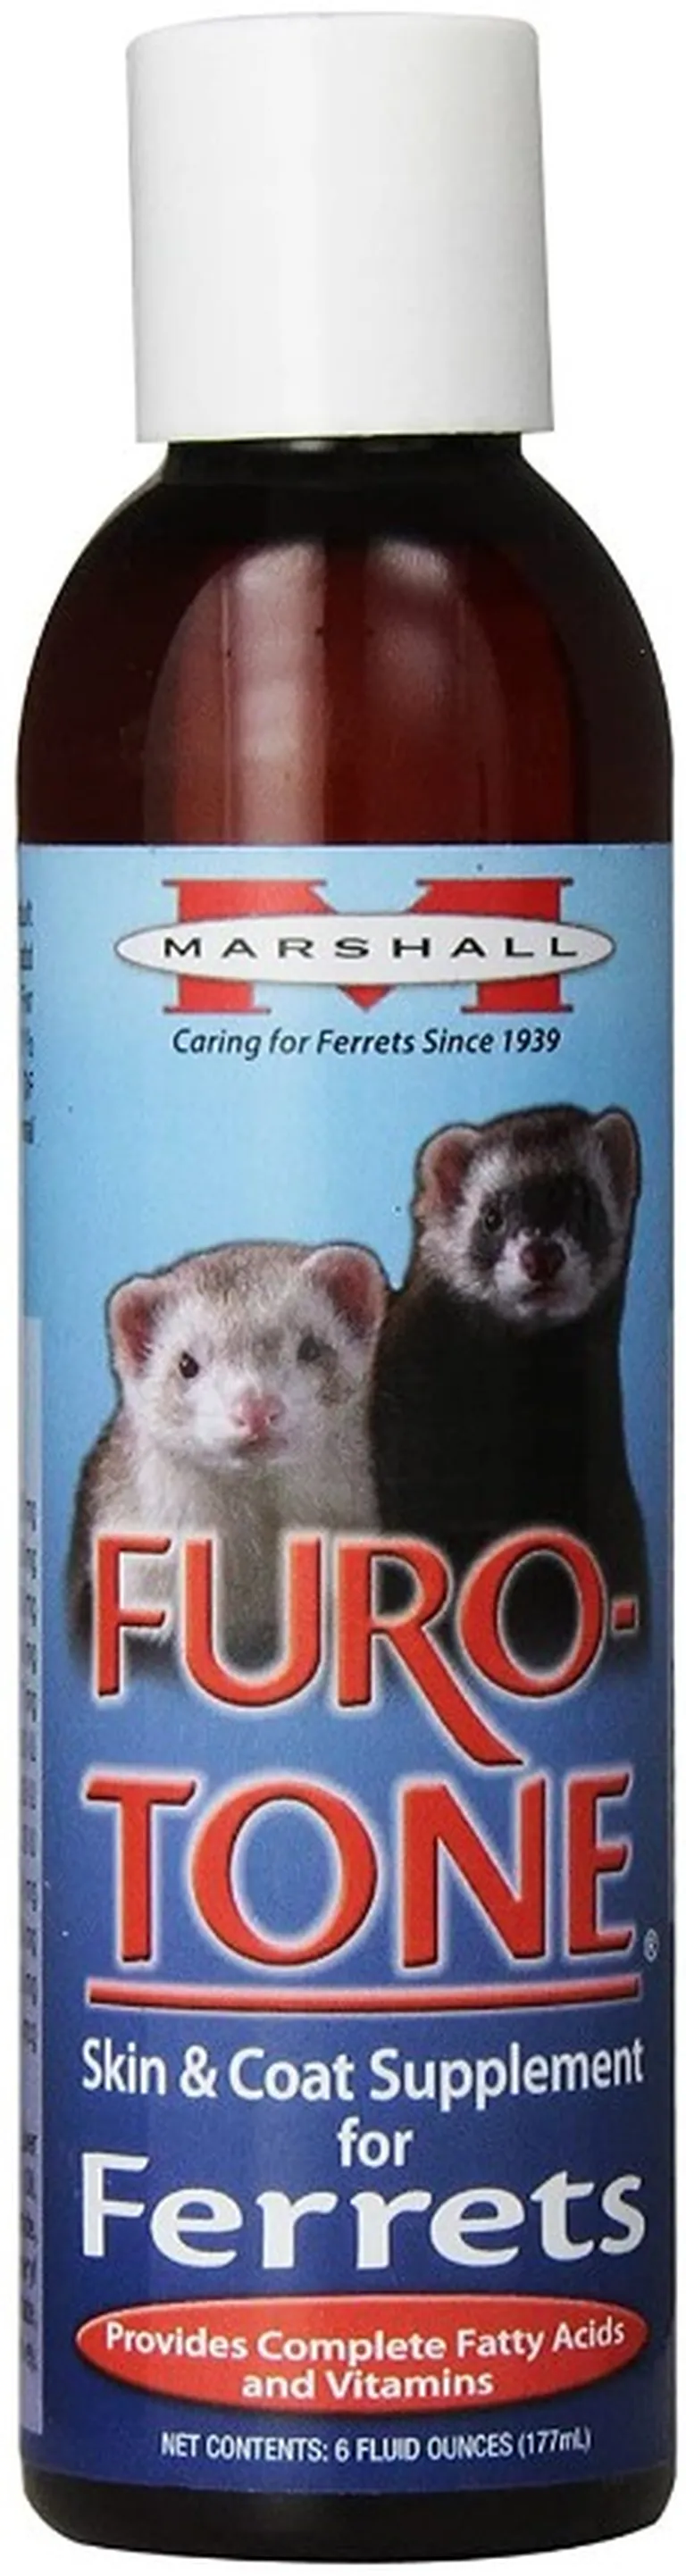 Marshall Furo Tone Skin and Coat Supplement for Ferrets Photo 4